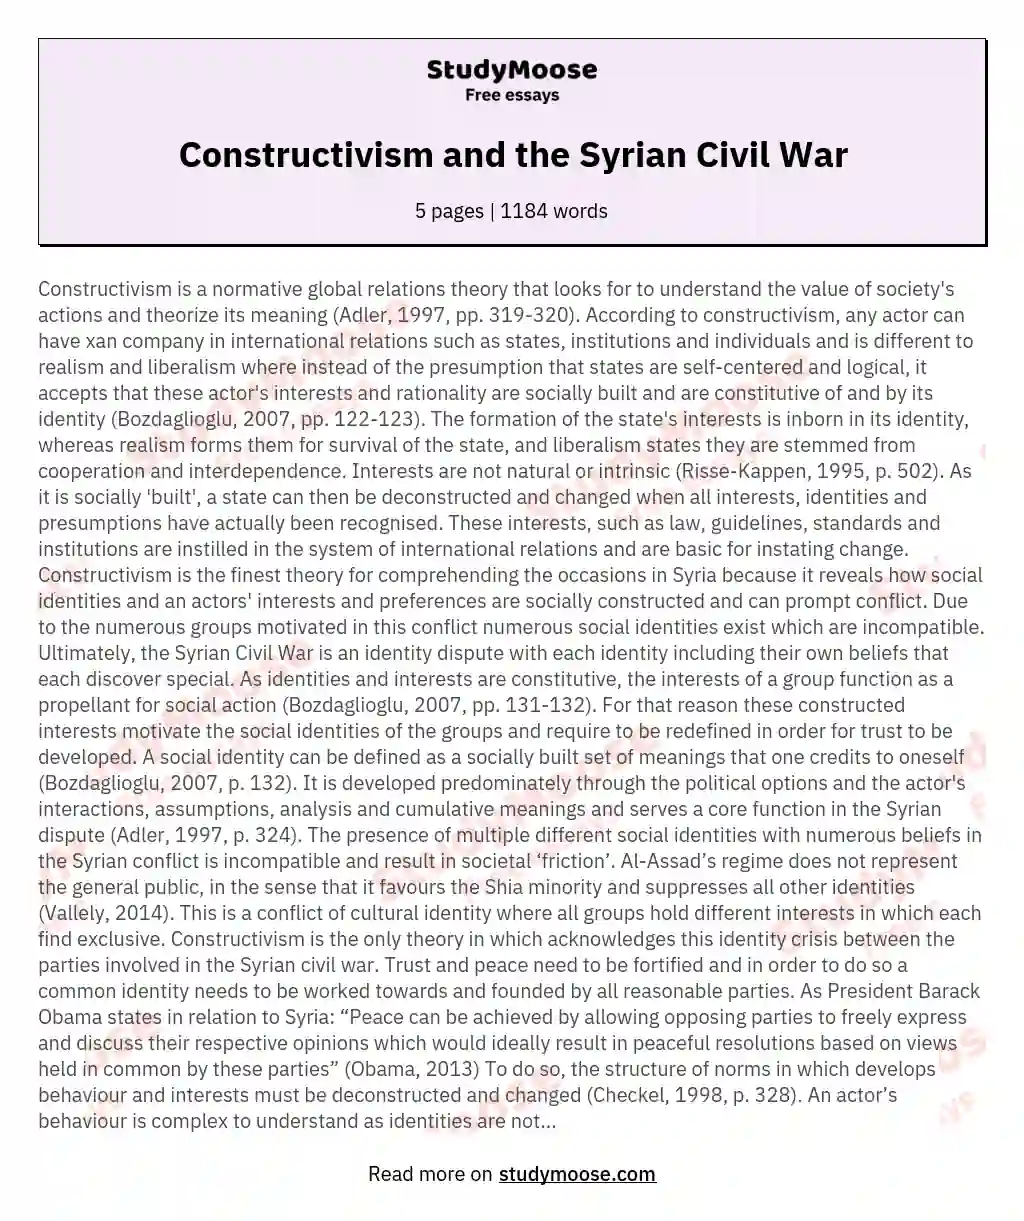 Constructivism and the Syrian Civil War essay